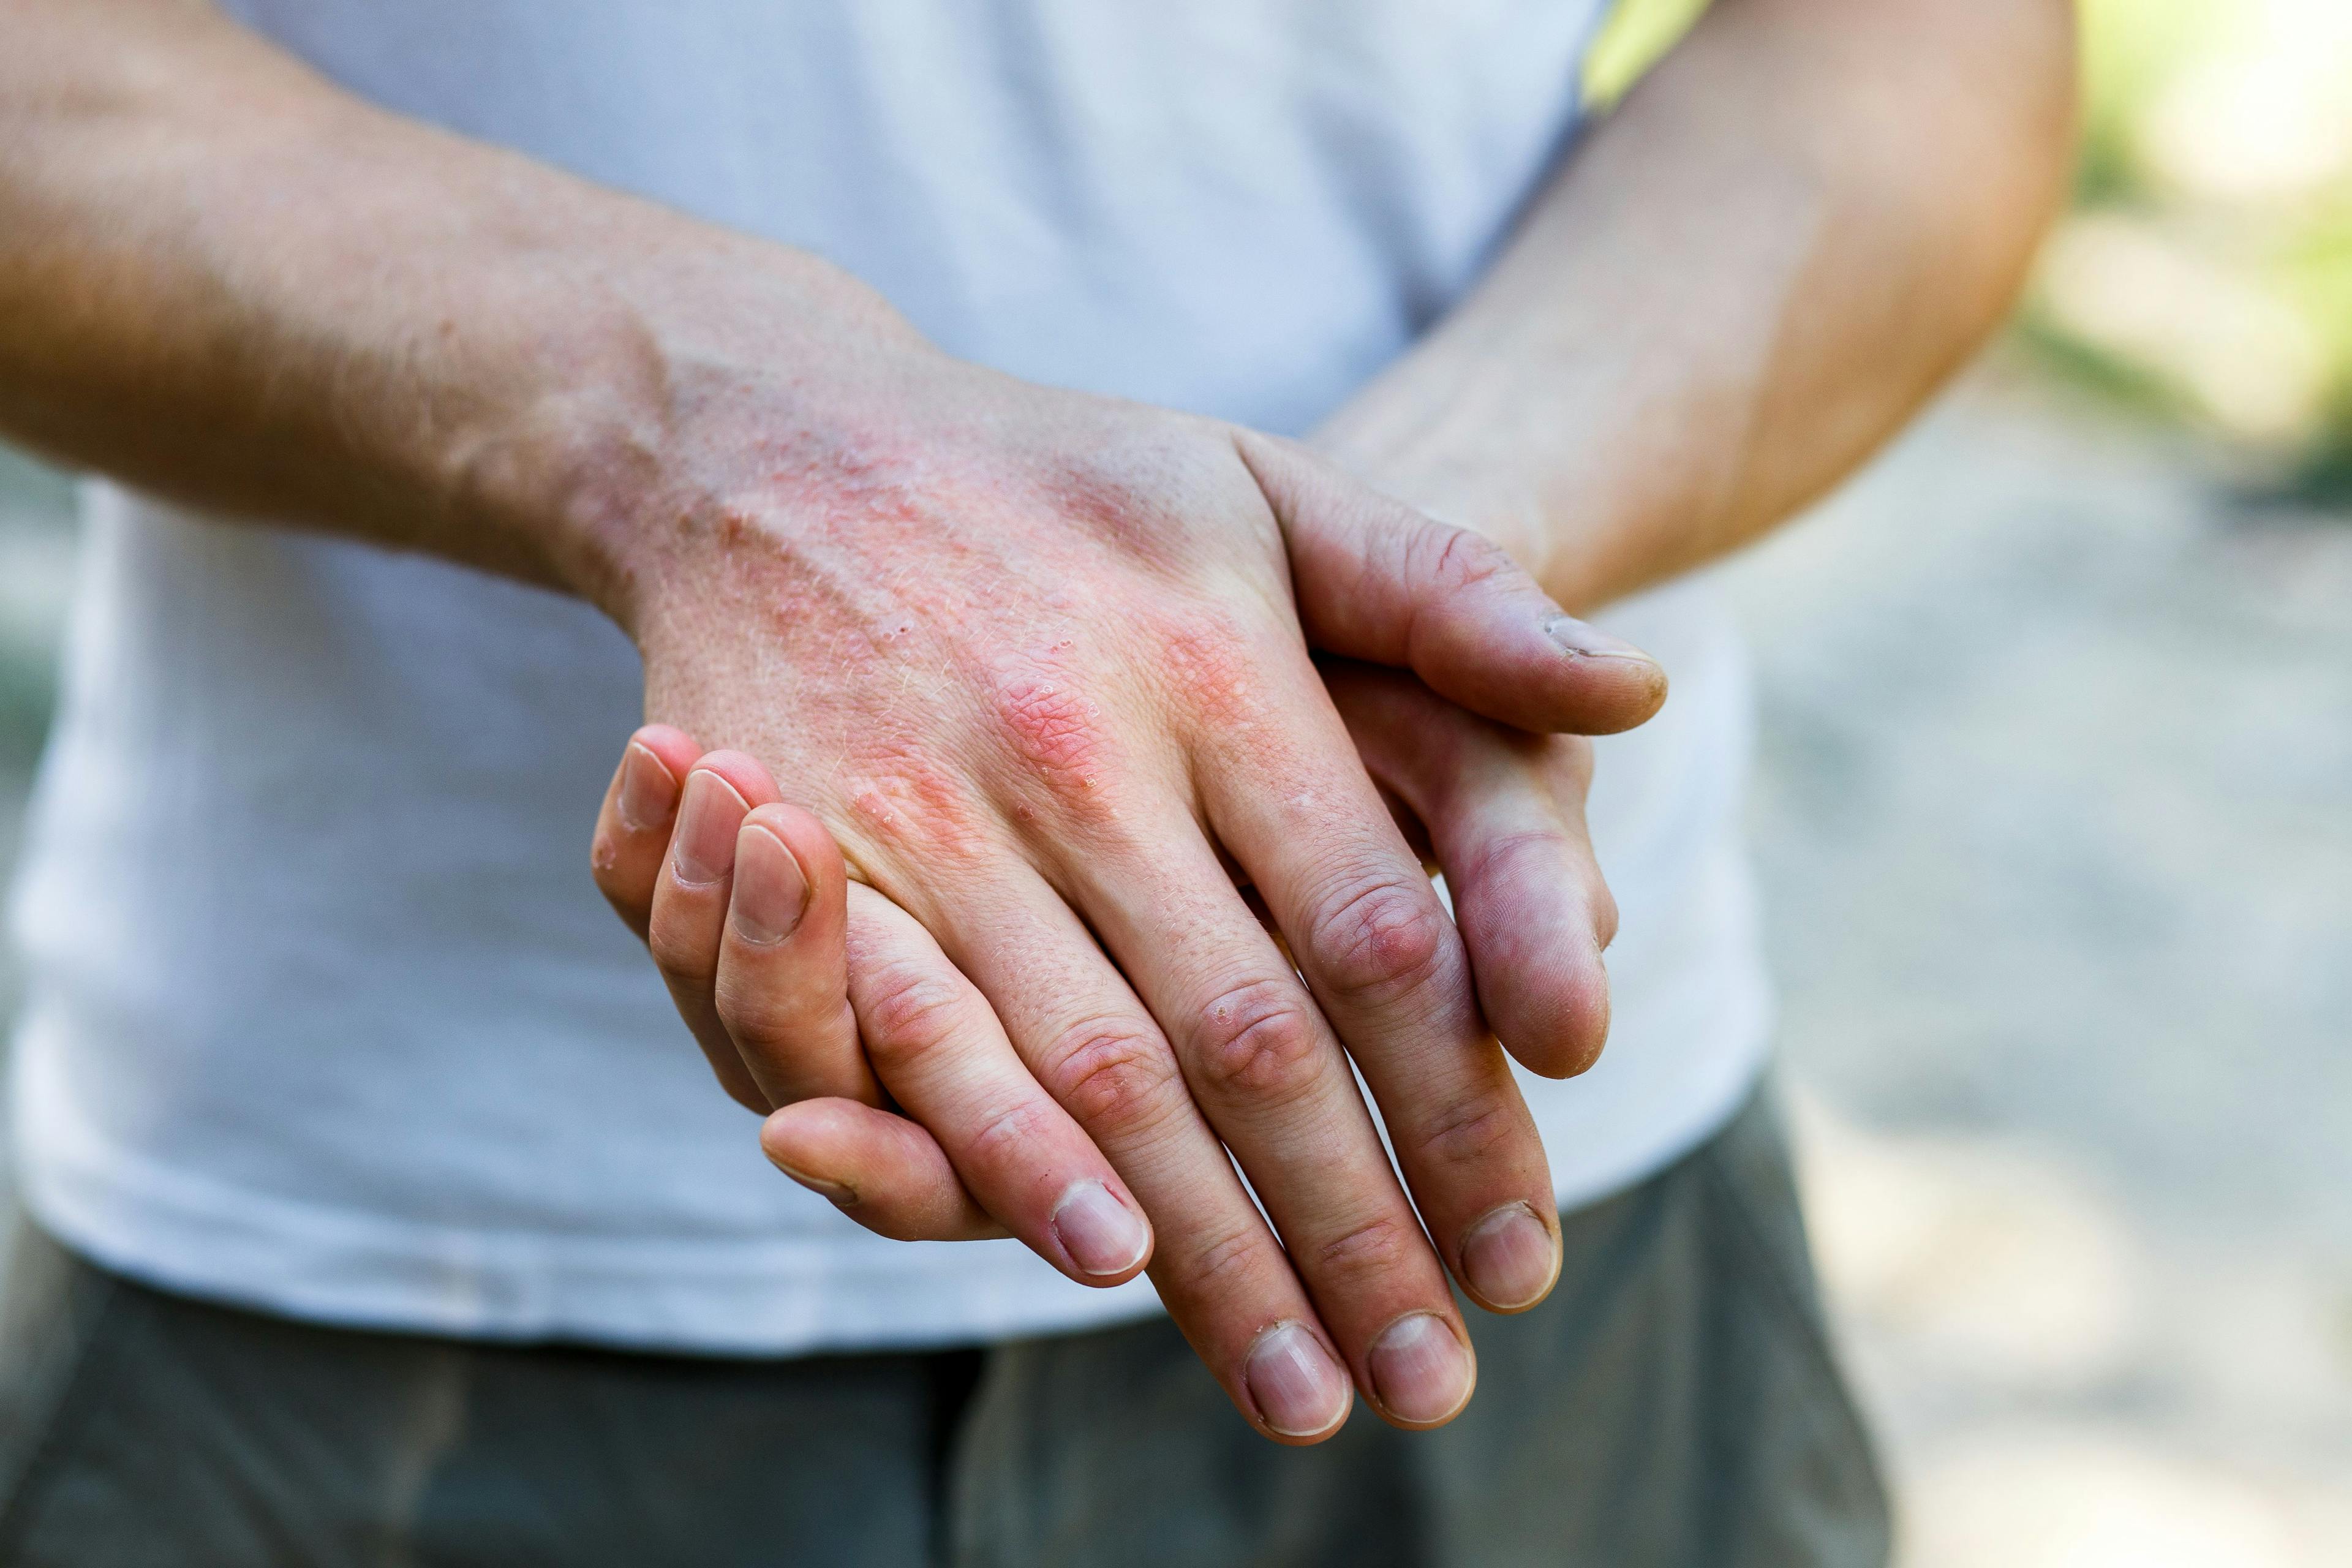 Patient with atopic dermatitis on hands | Image Credit: © Ольга Тернавская - stock.adobe.com